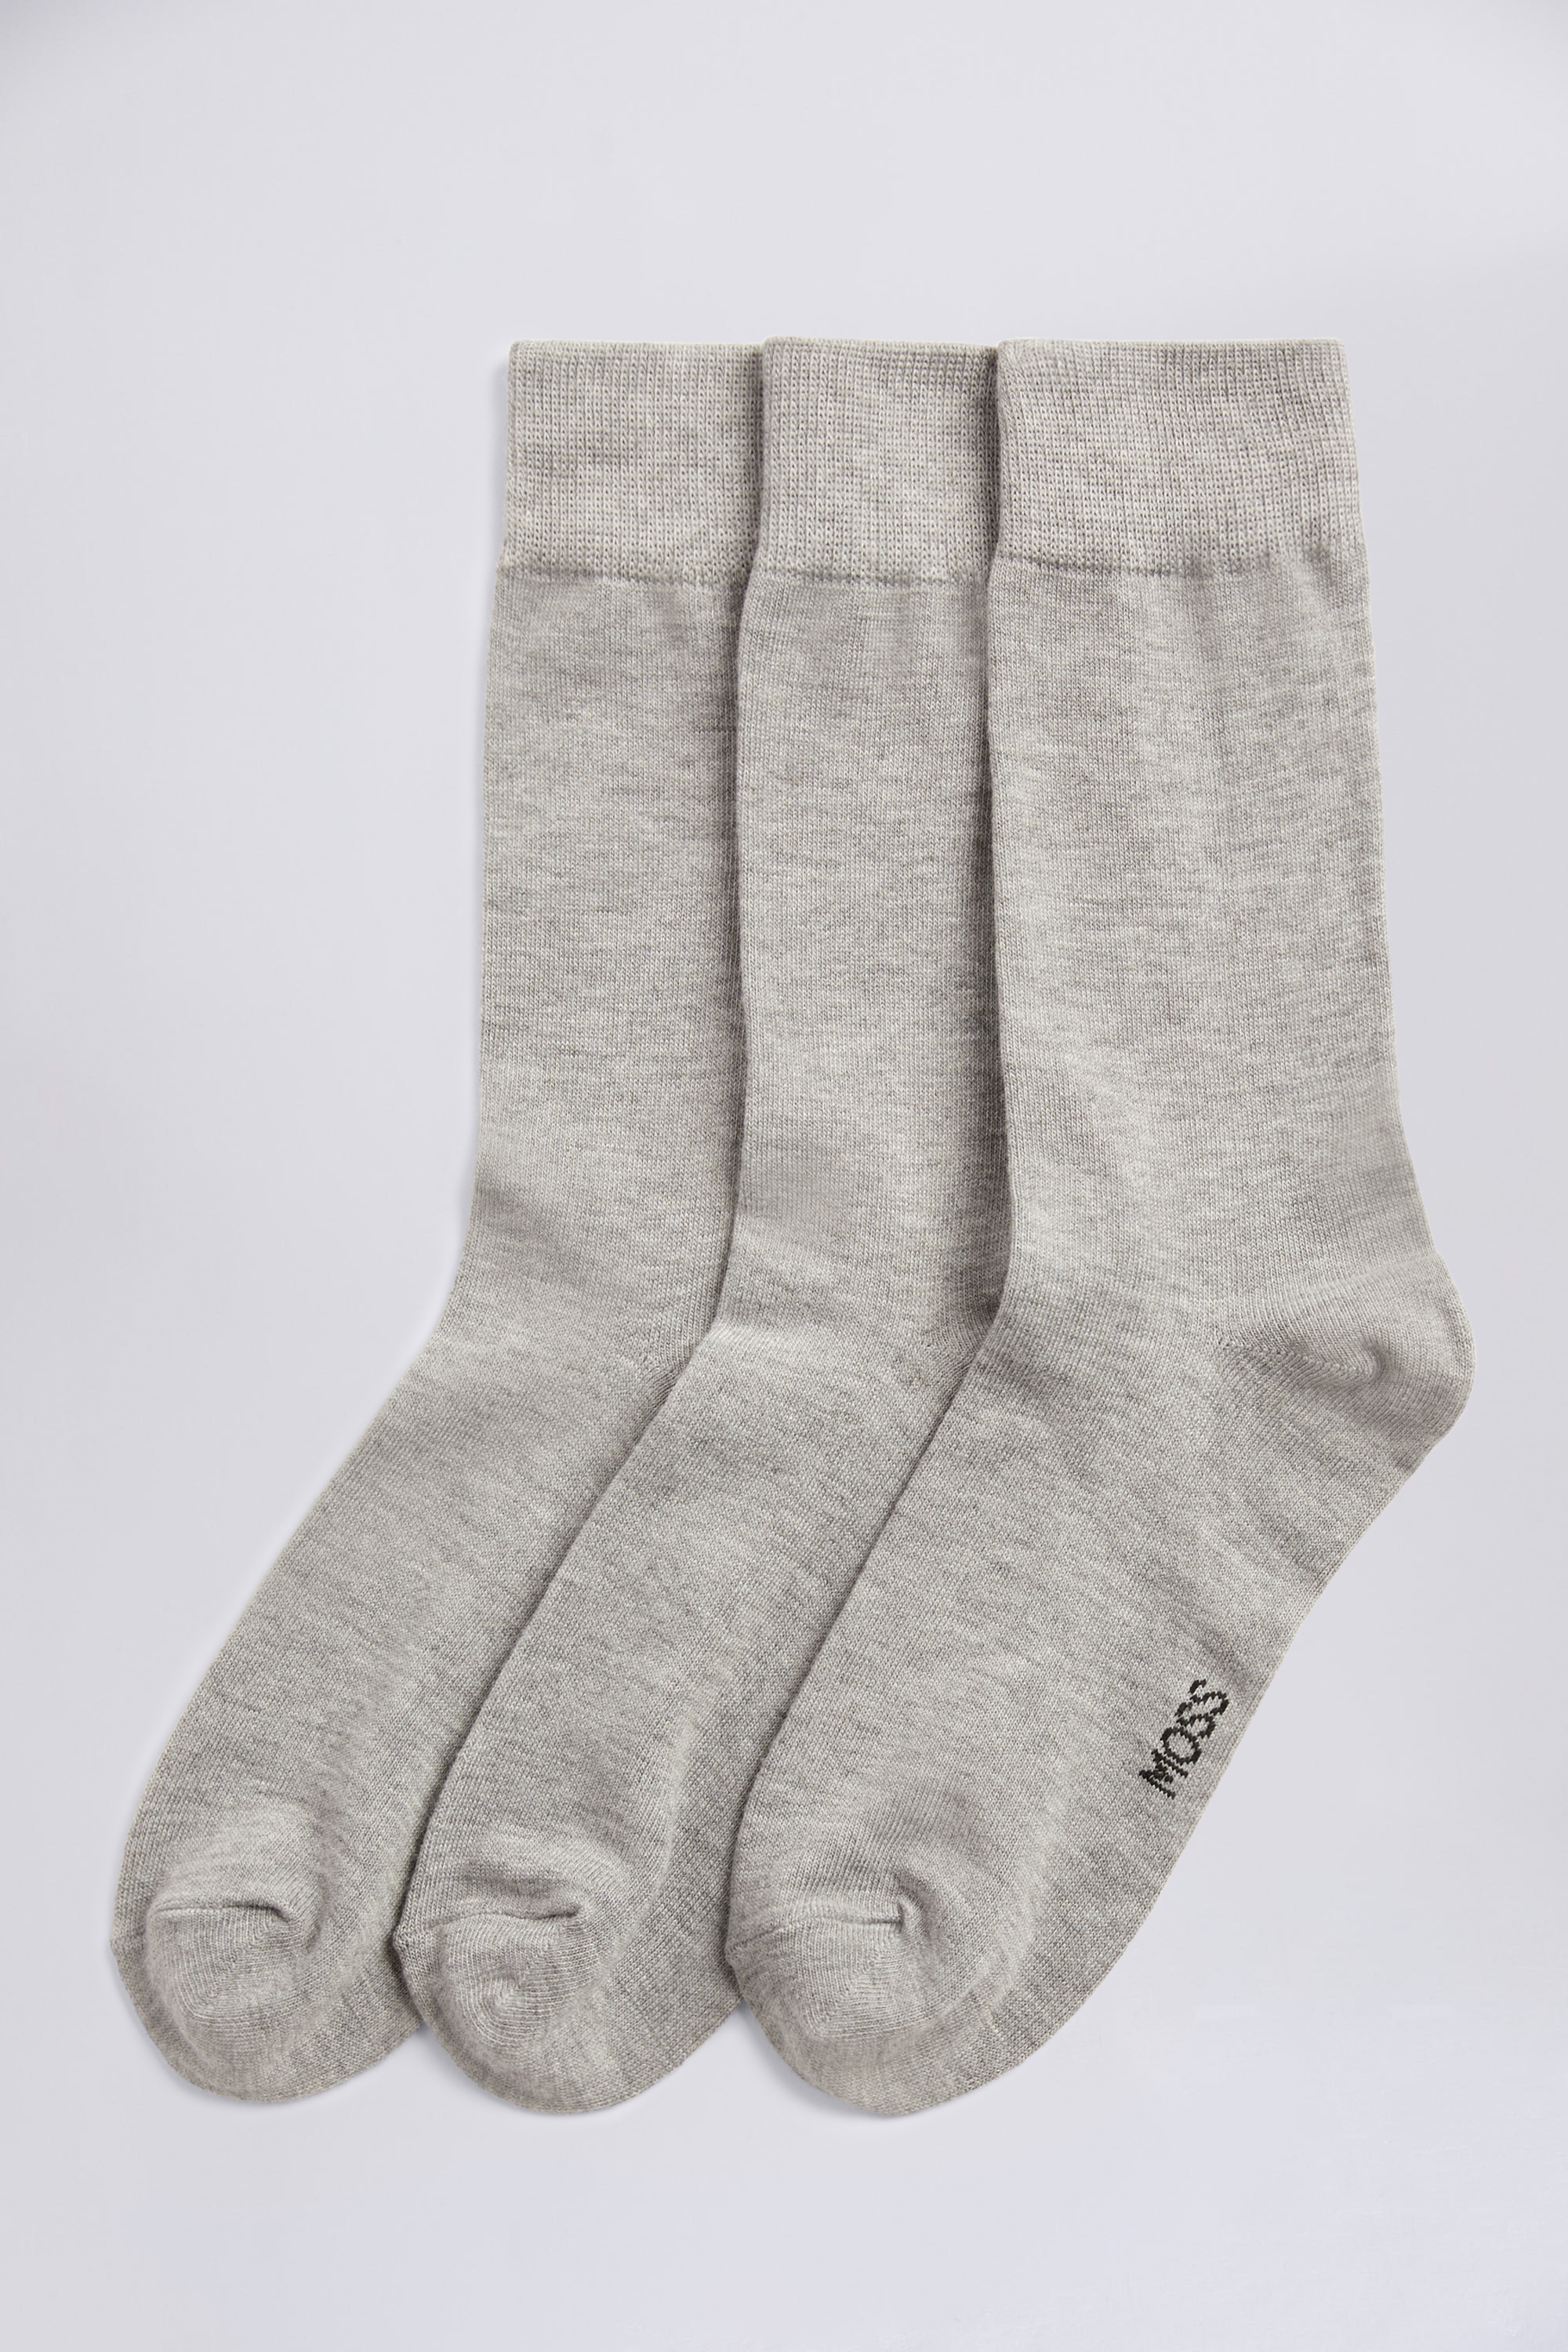 Grey 3-Pack Bamboo Socks | Buy Online at Moss